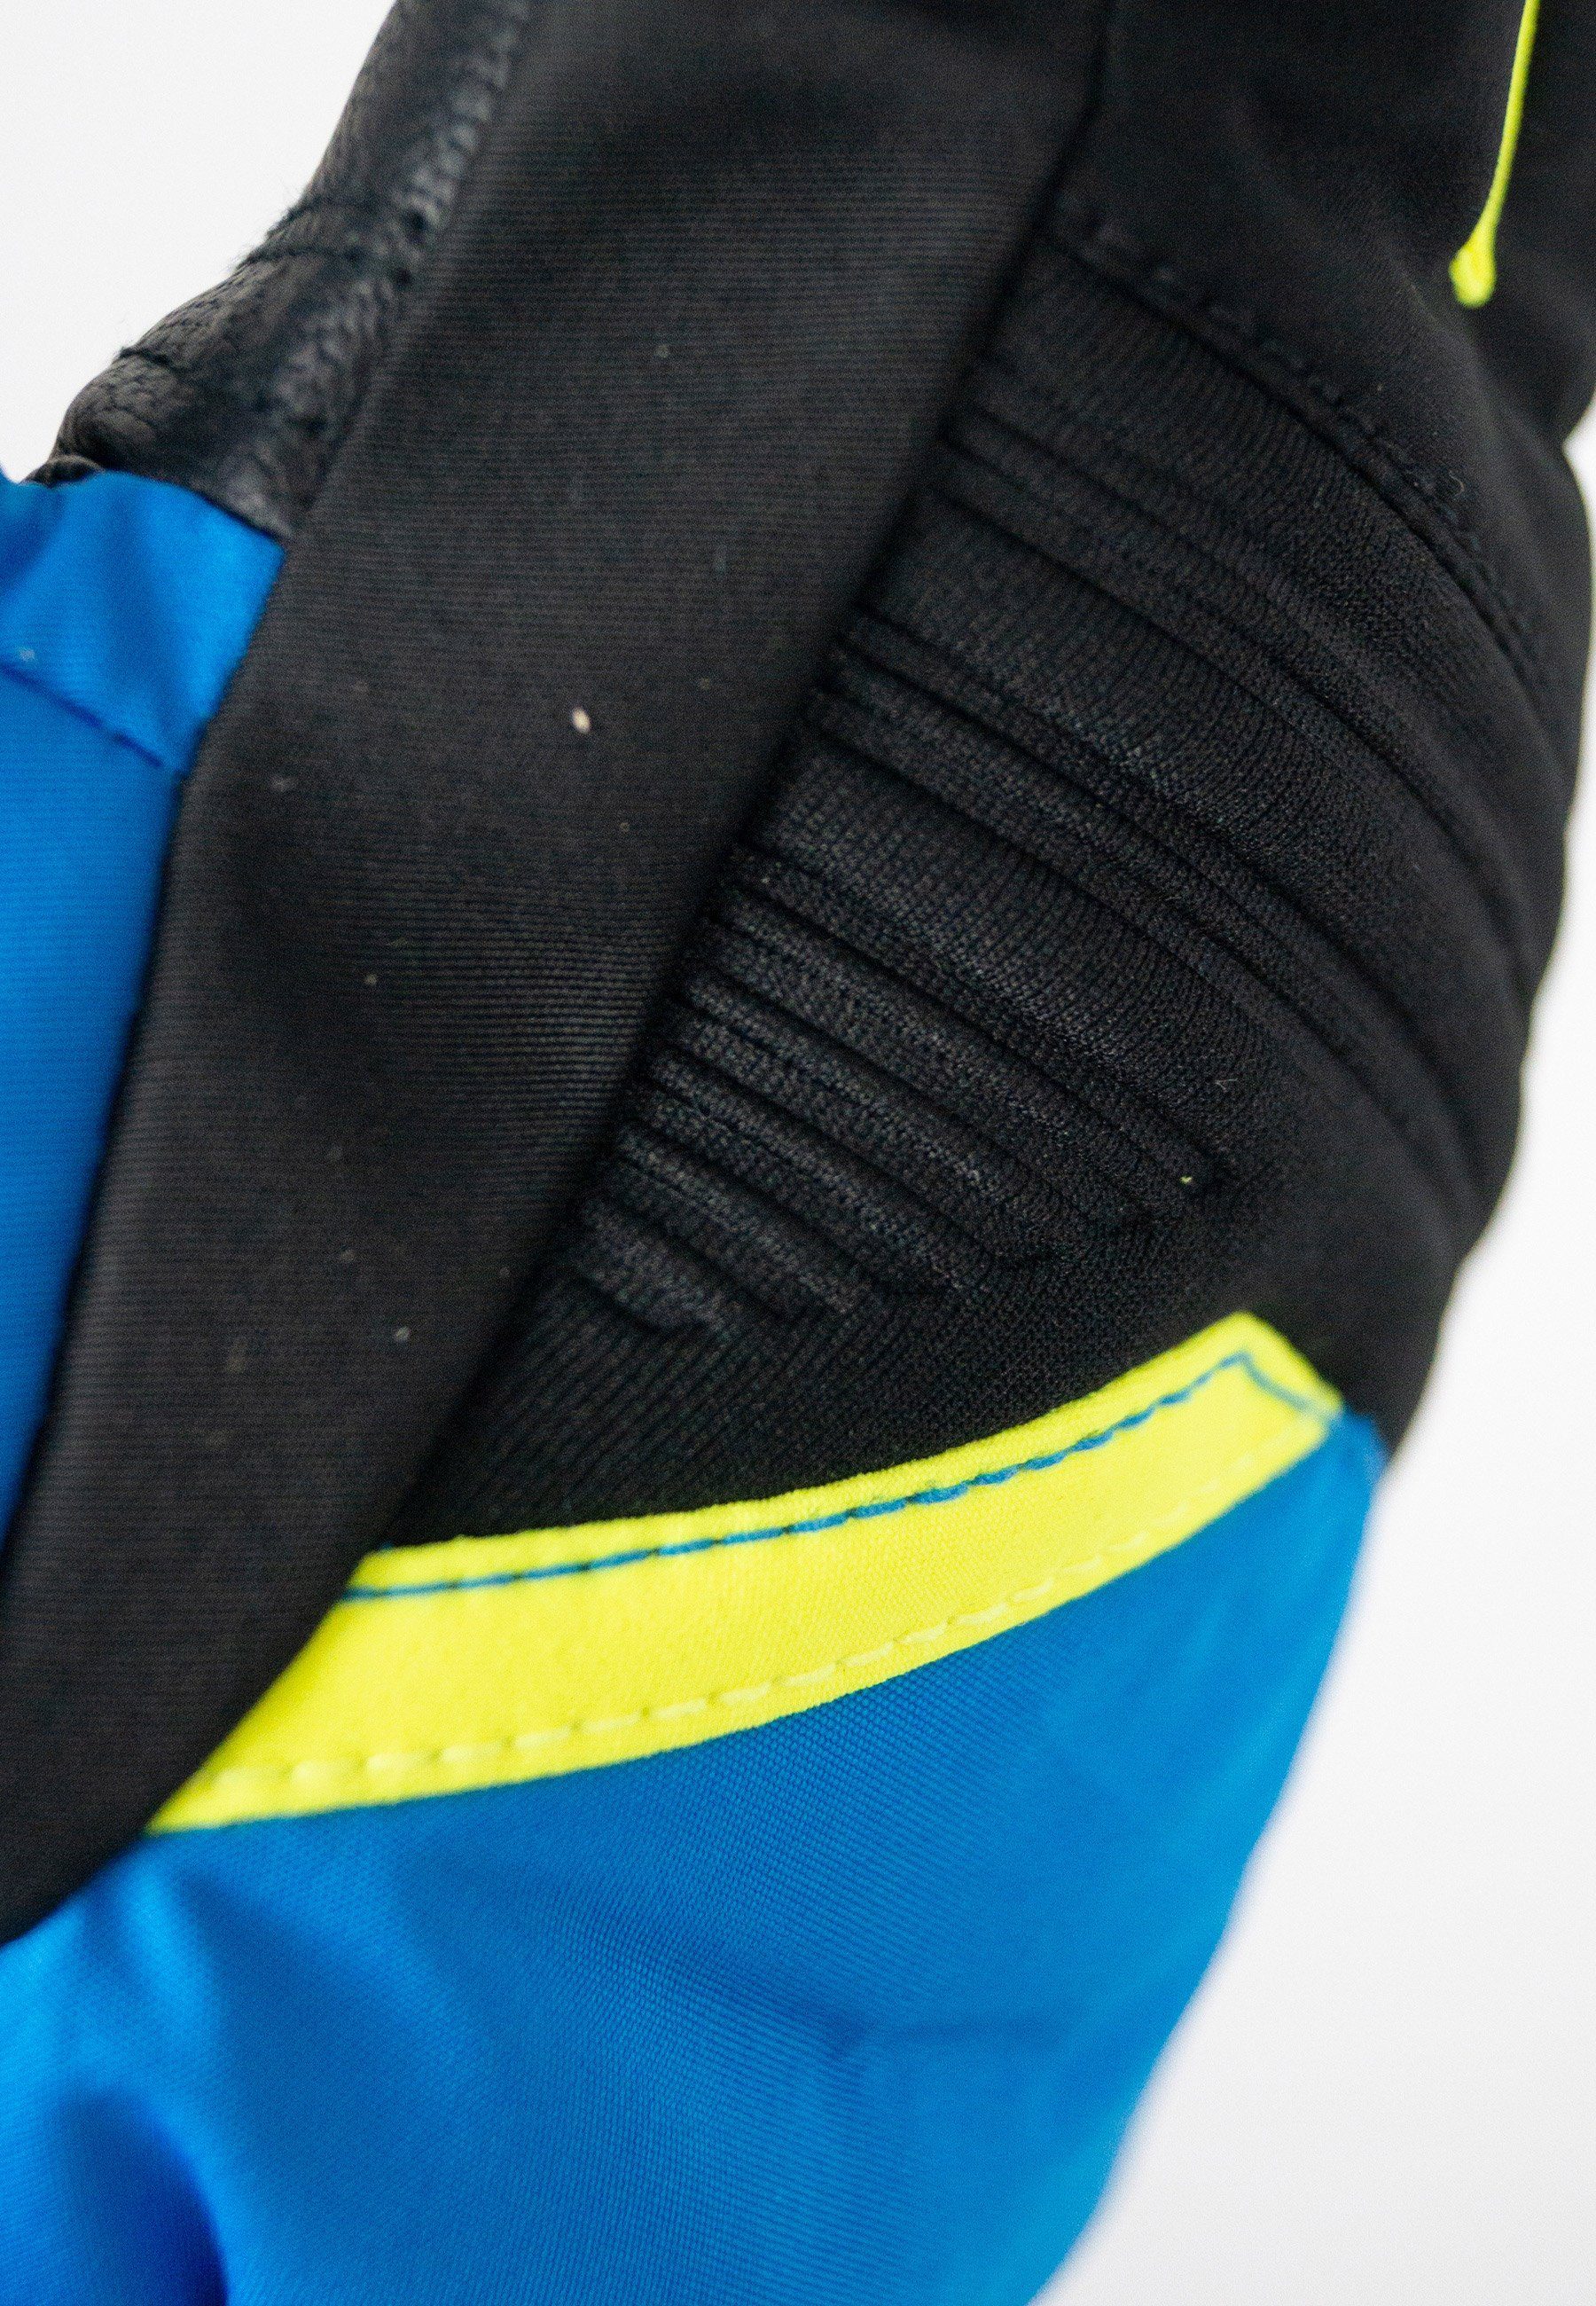 Skihandschuhe in Bradley Design R-TEX® schickem Reusch XT blau-schwarz